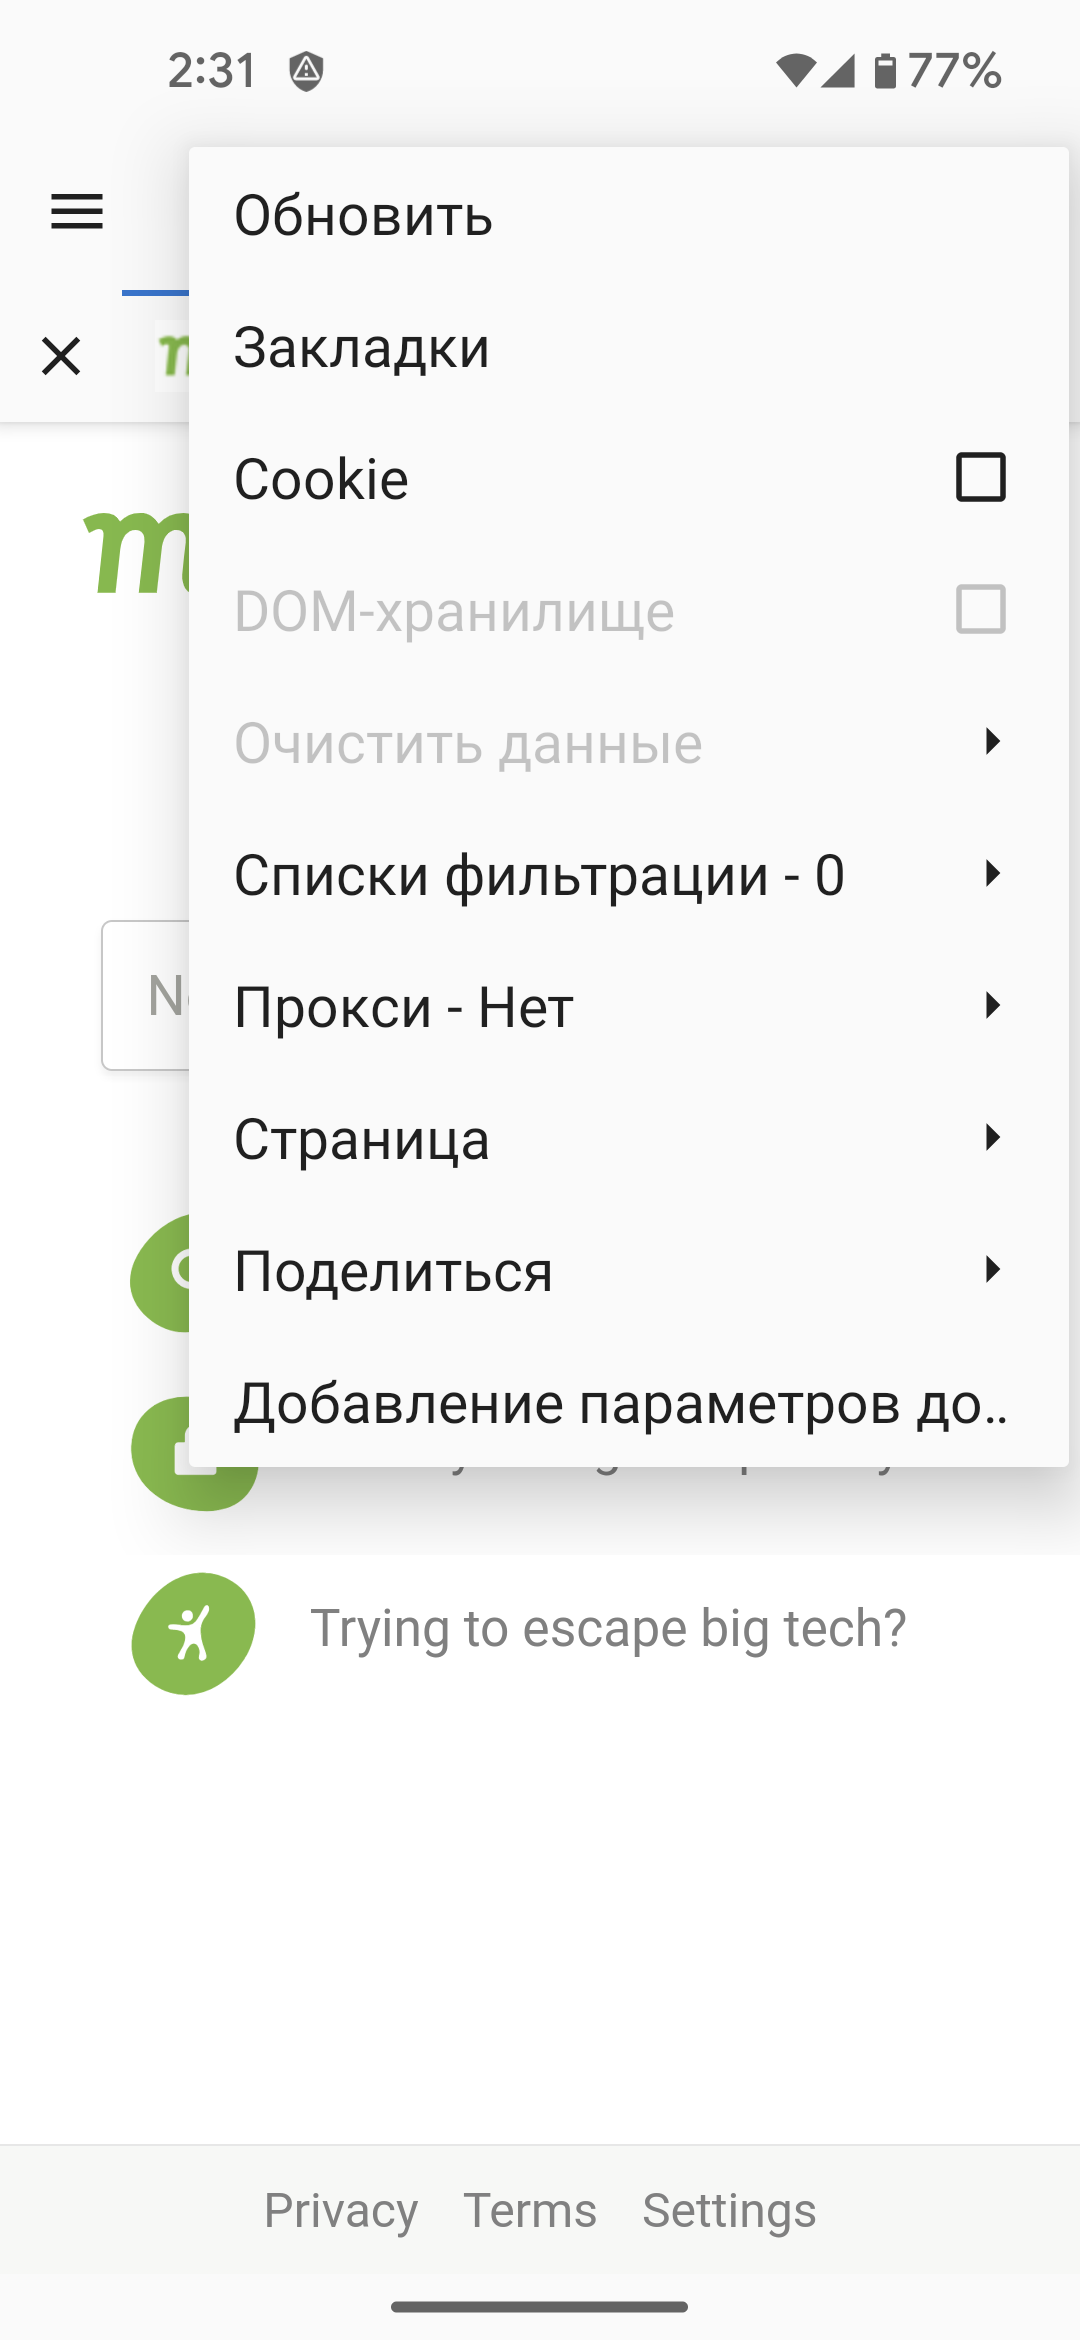 fastlane/metadata/android/ru-RU/images/phoneScreenshots/03-OptionsMenu-ru.png